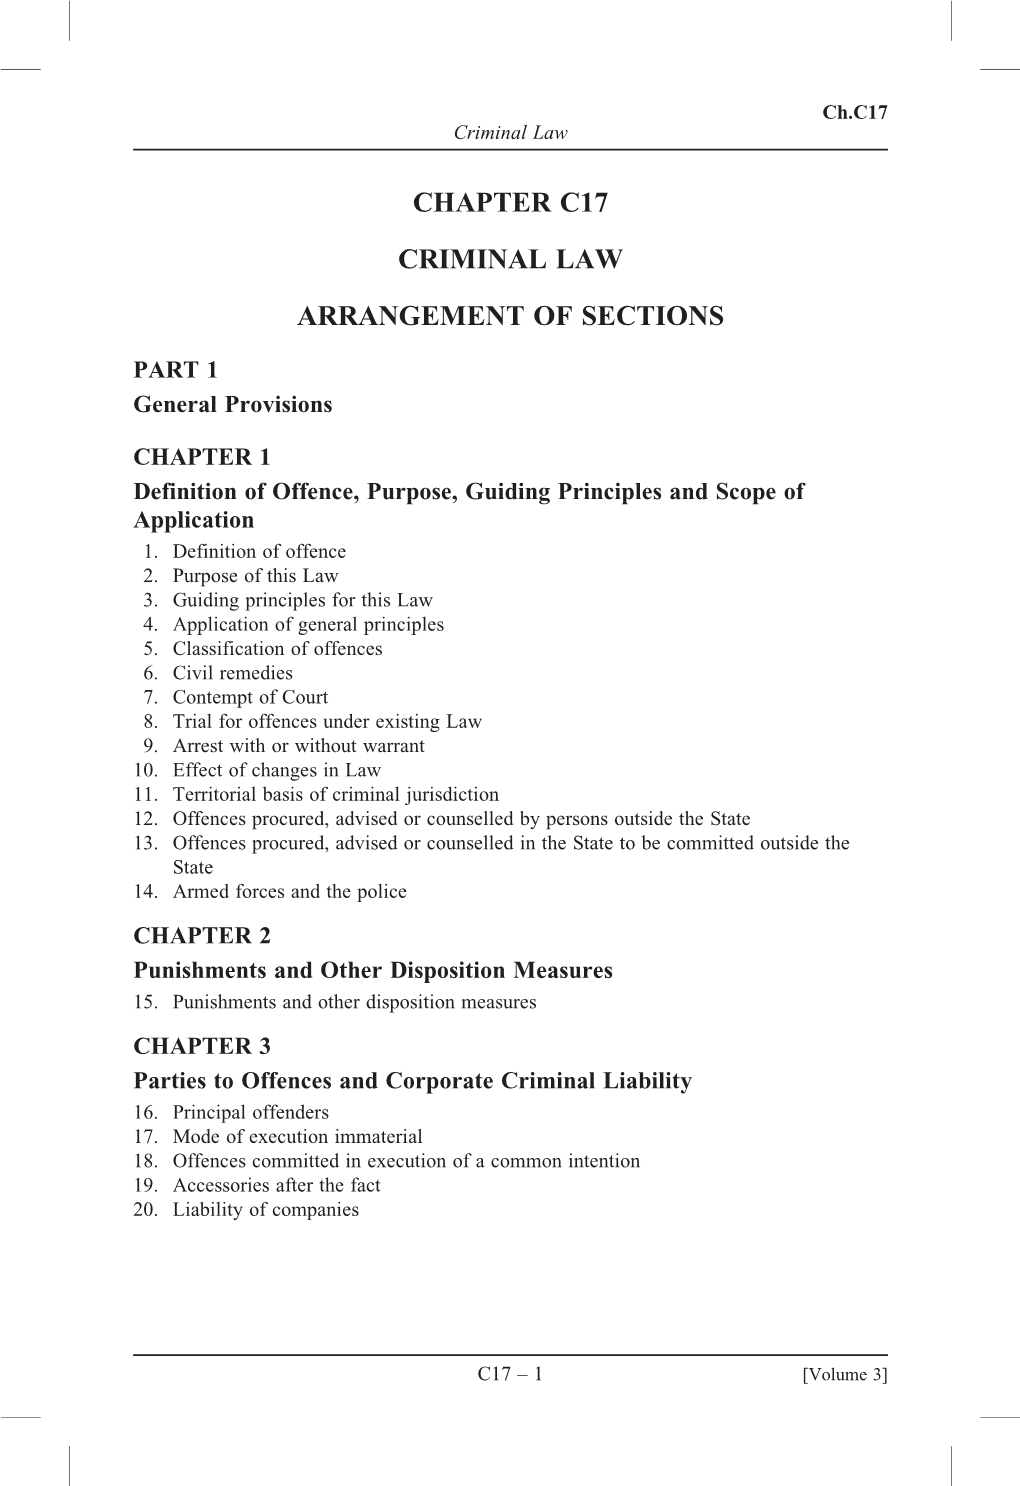 Chapter C17 Criminal Law Arrangement of Sections